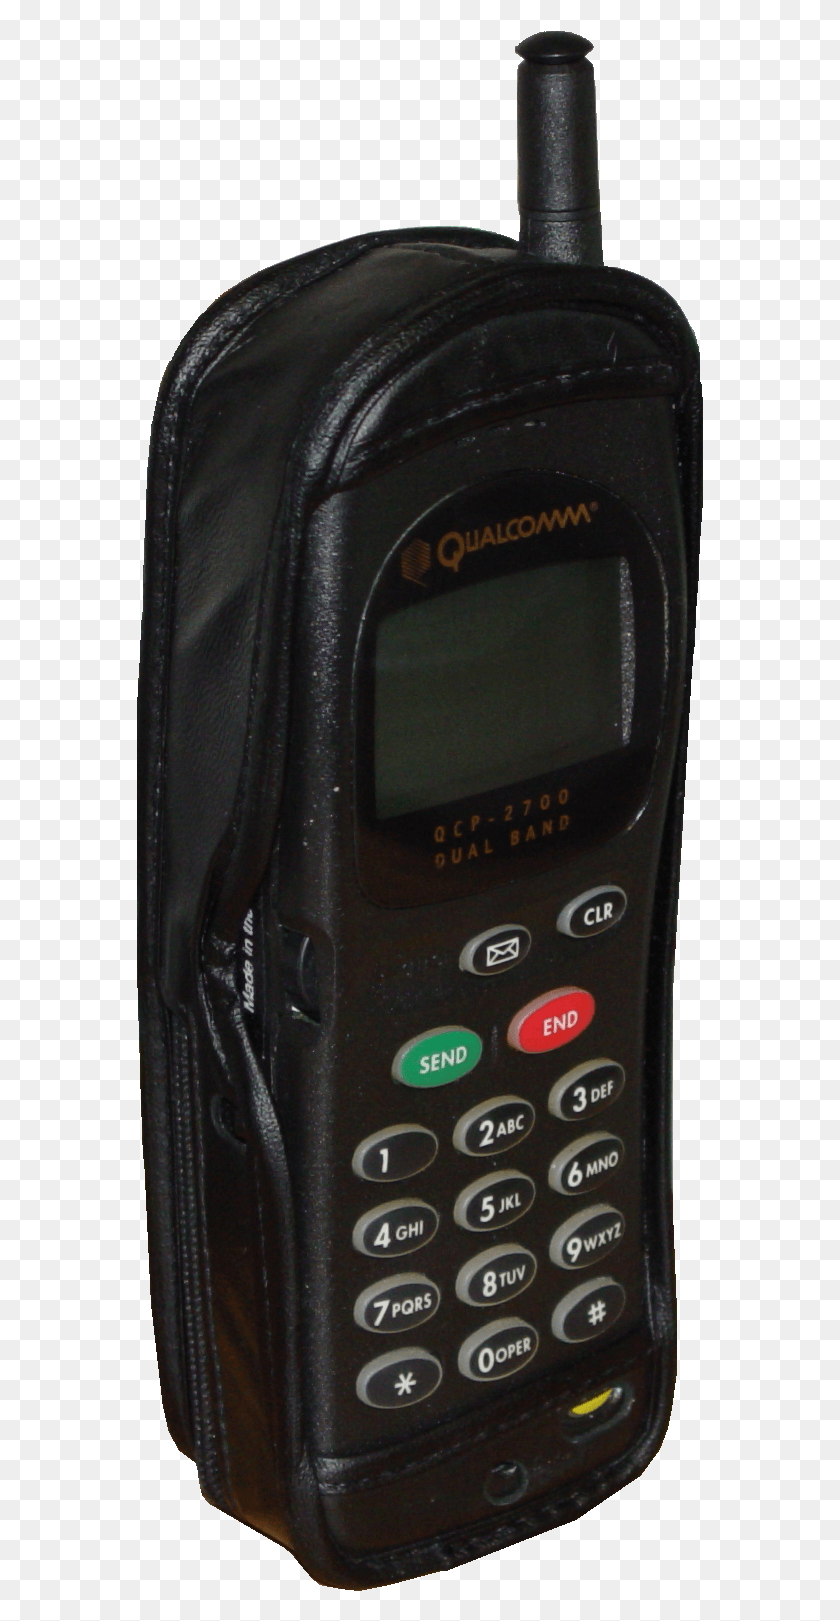 567x1561 Qualcomm Qcp 2700 Телефон Сейчас И Тогда, Электроника, Мобильный Телефон, Сотовый Телефон Png Скачать